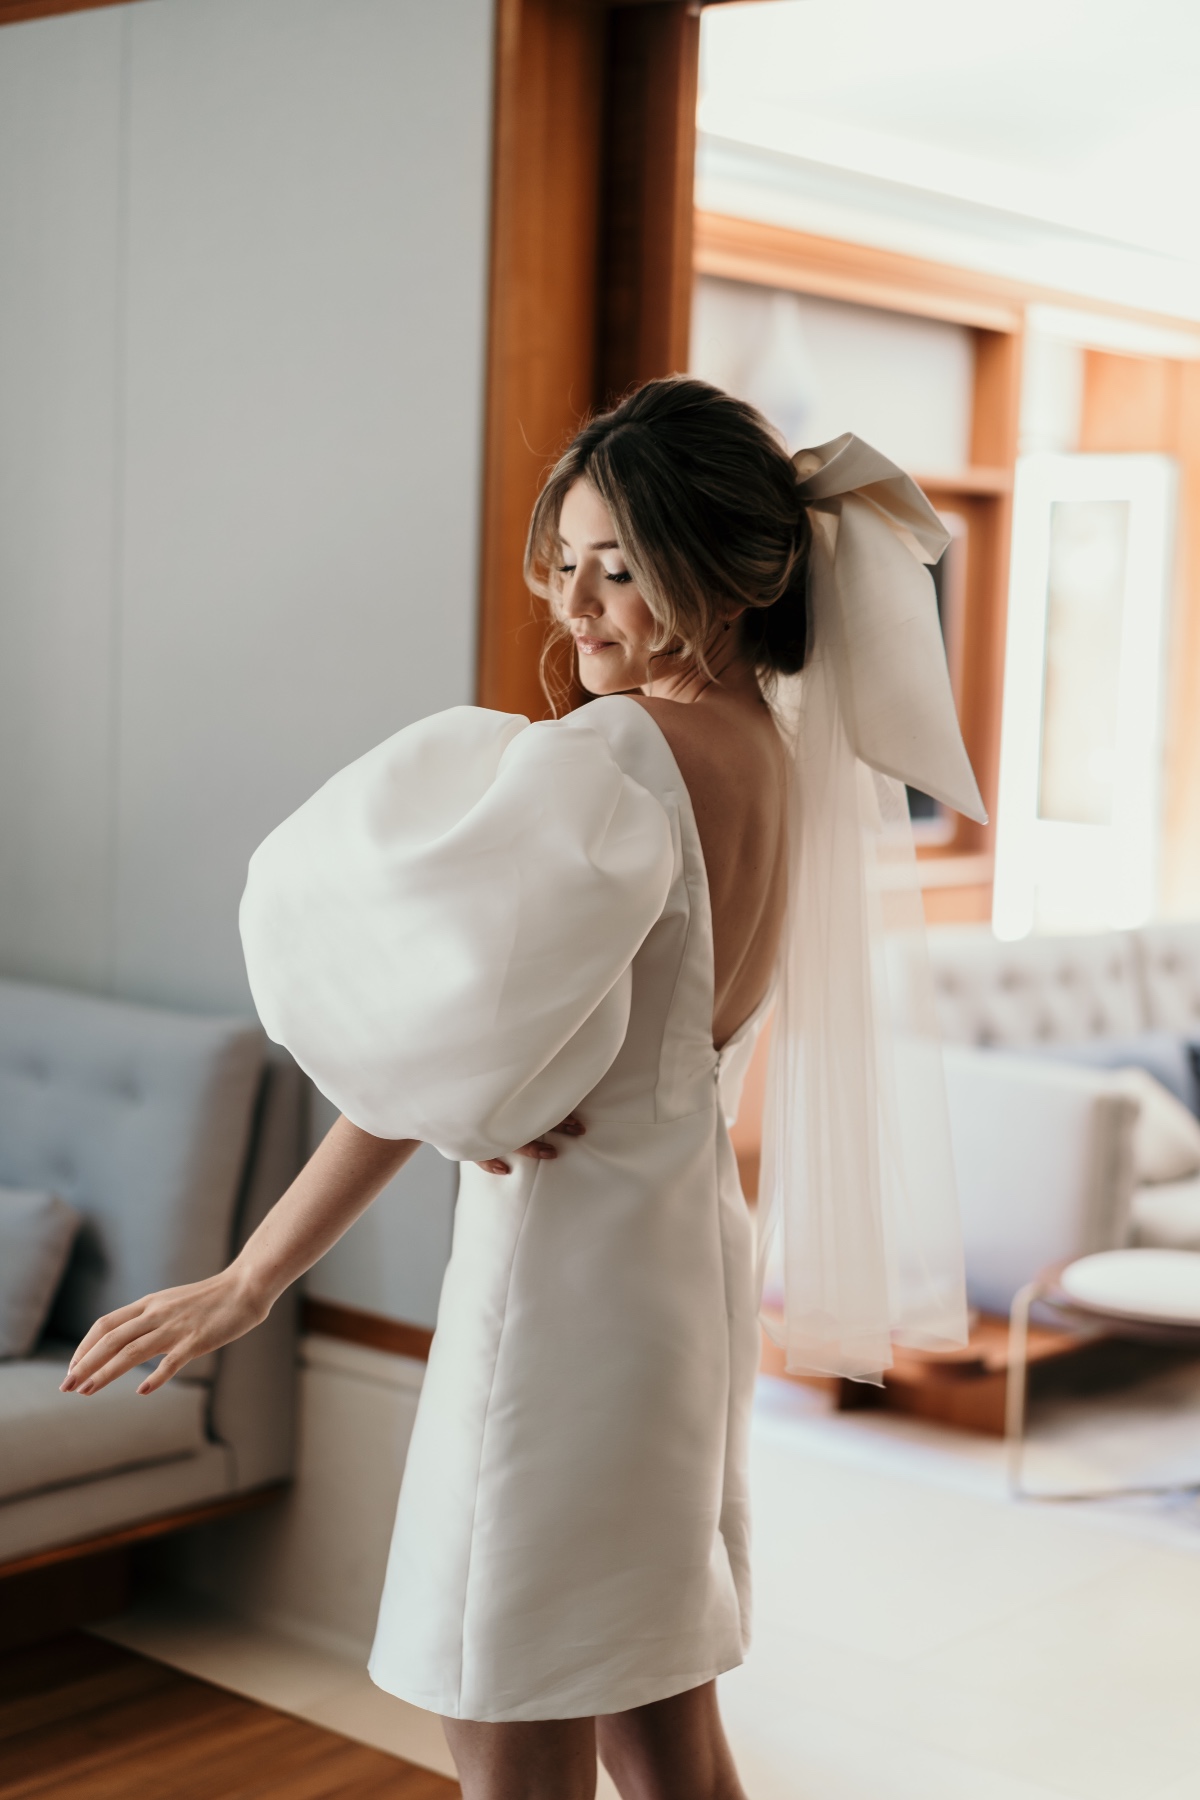 An Efforlessly Chic Take On The Hotel Wedding